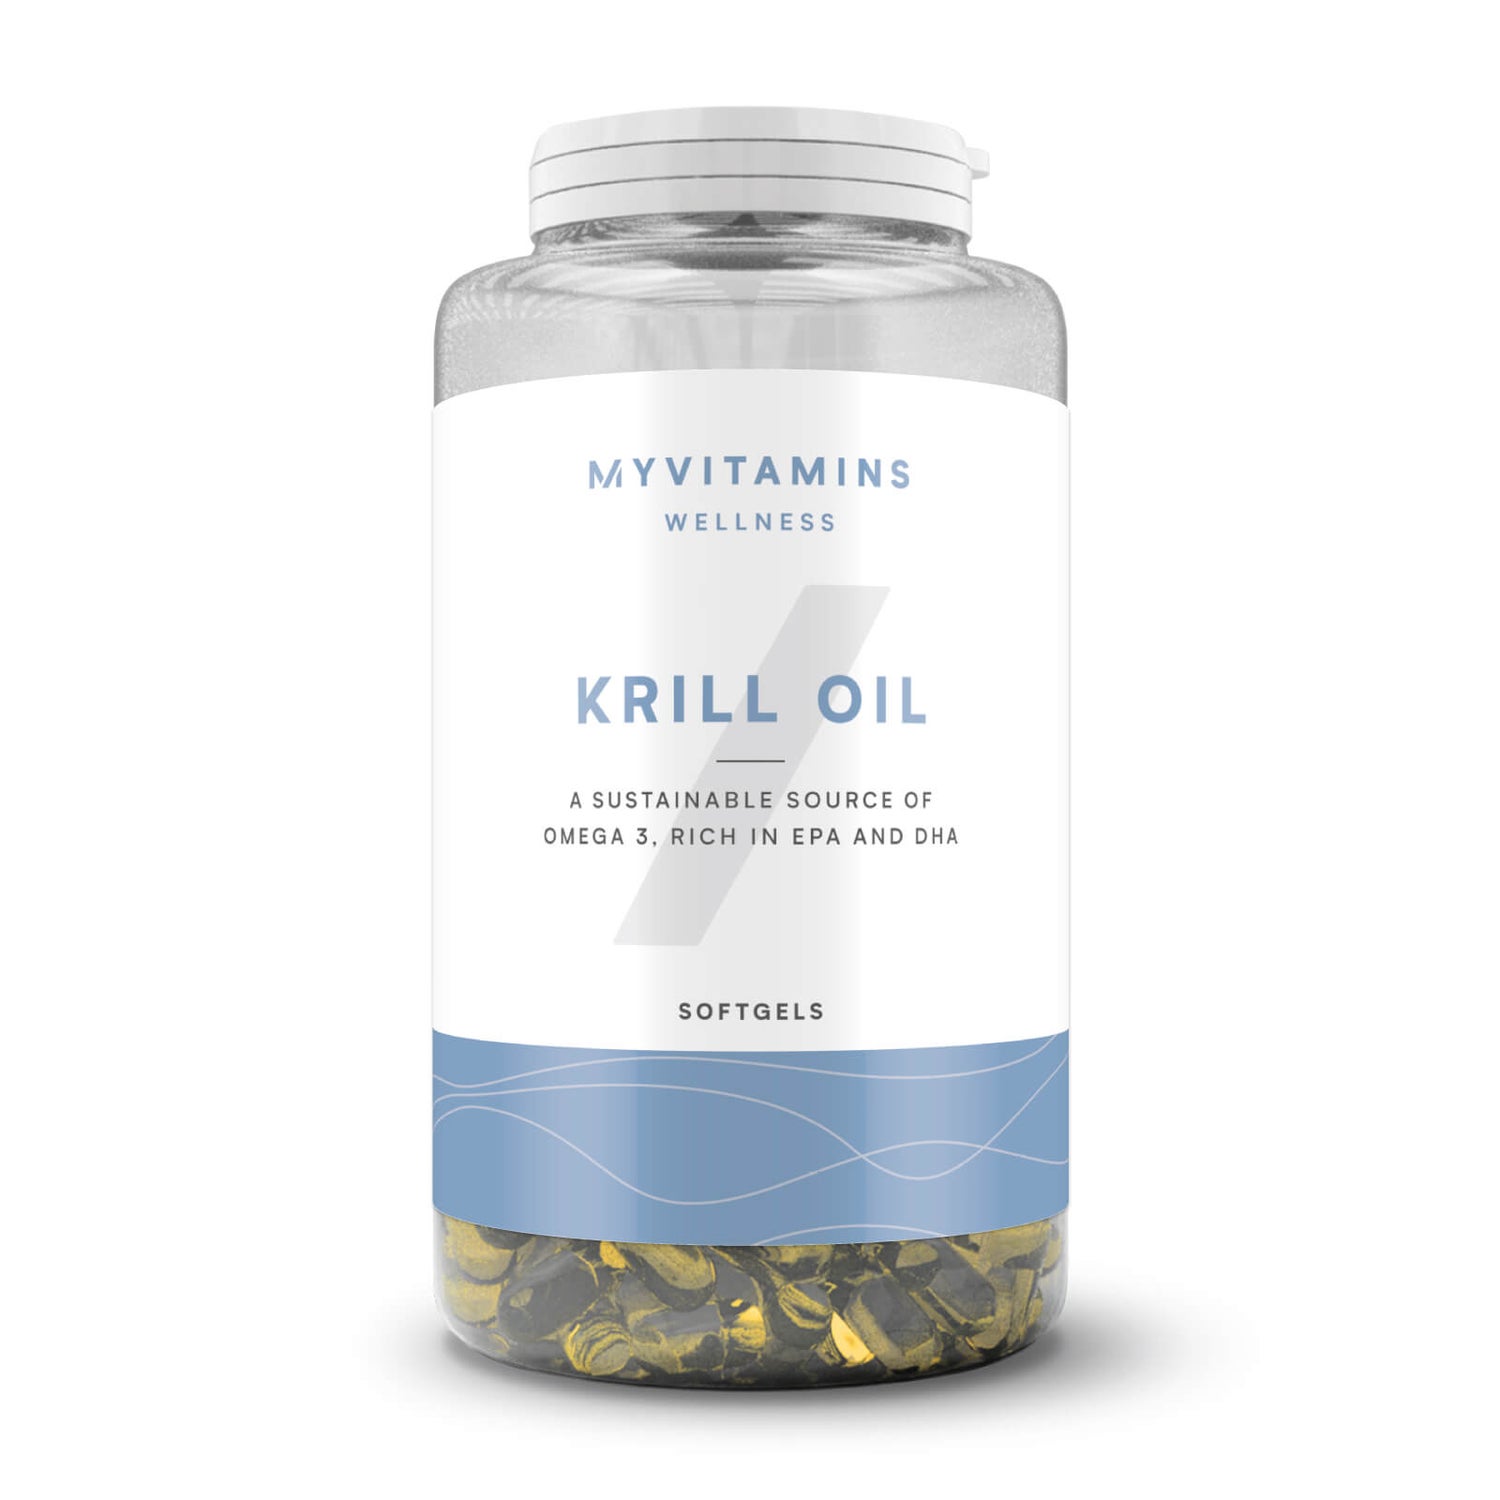 Myvitamins Krill Oil - 3 Months (180 Softgels)